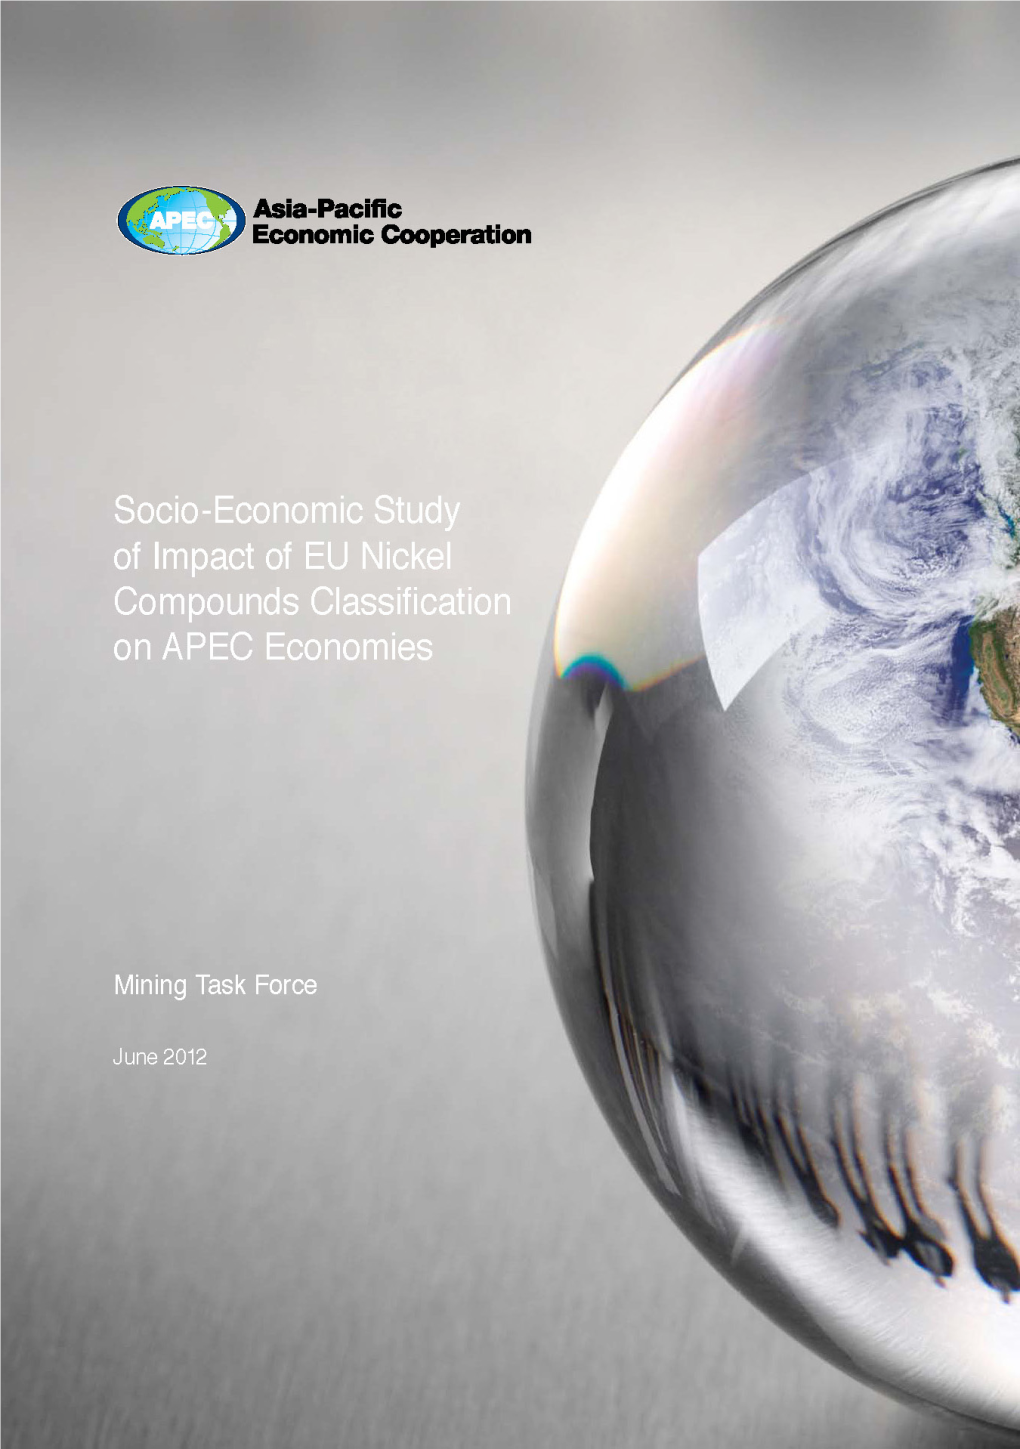 Socio-Economic Study of Impact of EU Nickel Compounds Classification on APEC Economies